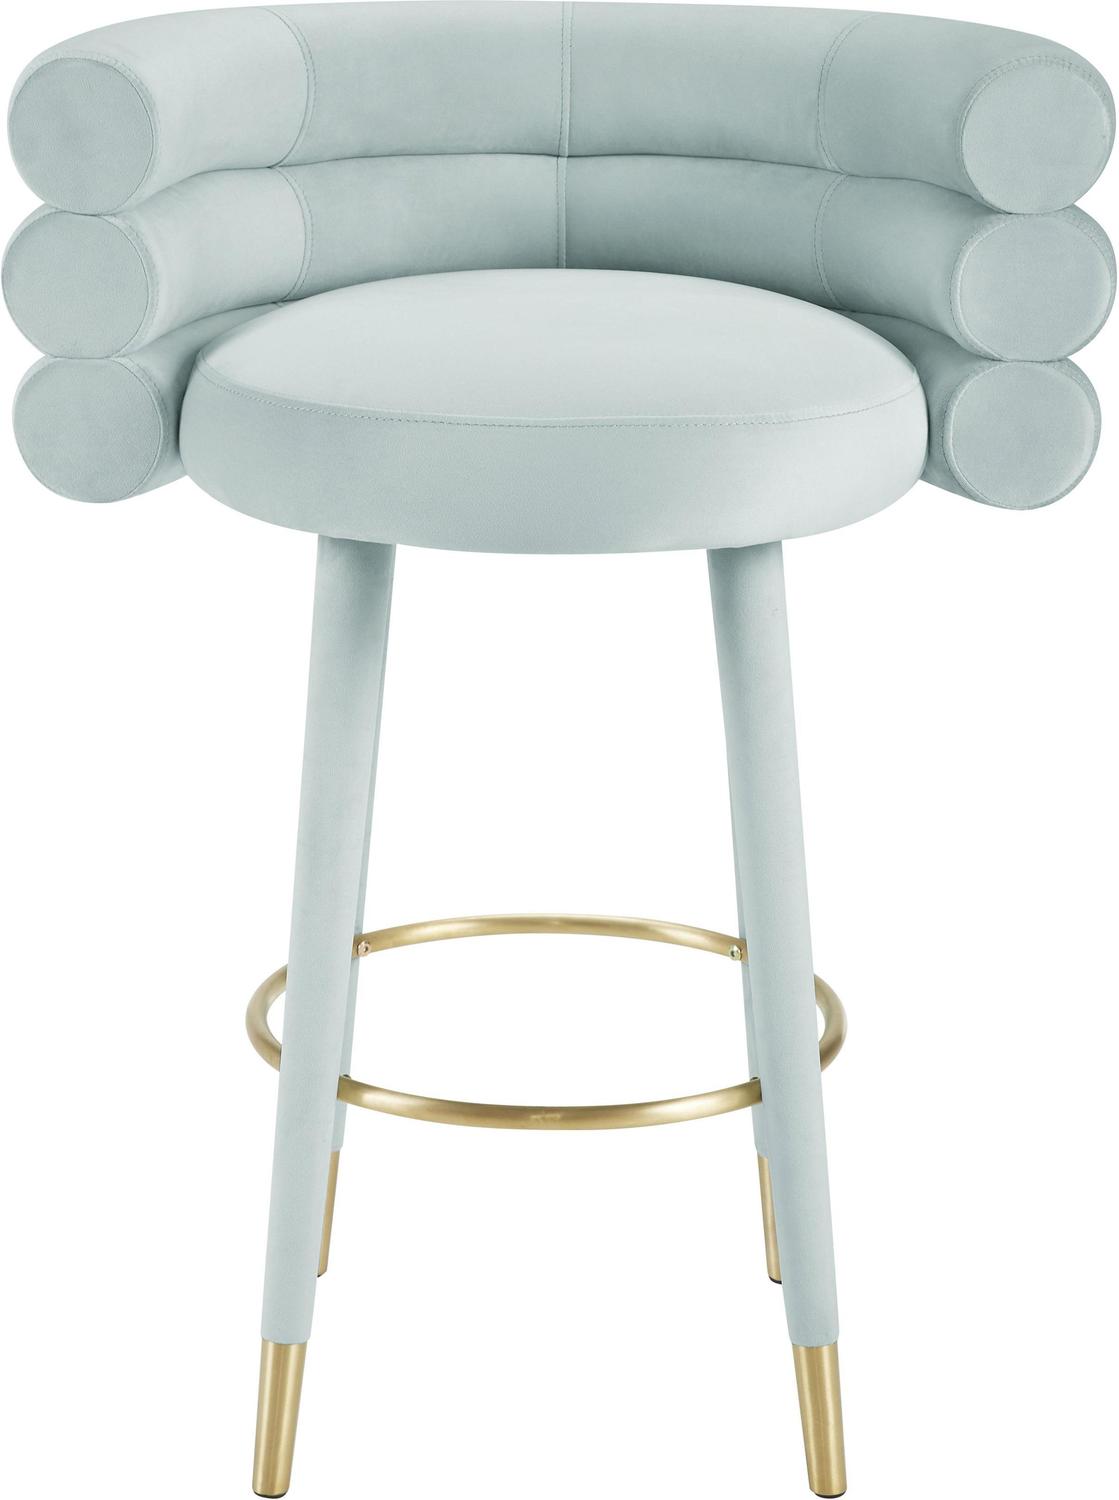 wooden high back bar stools Contemporary Design Furniture Stools Sea Foam Green